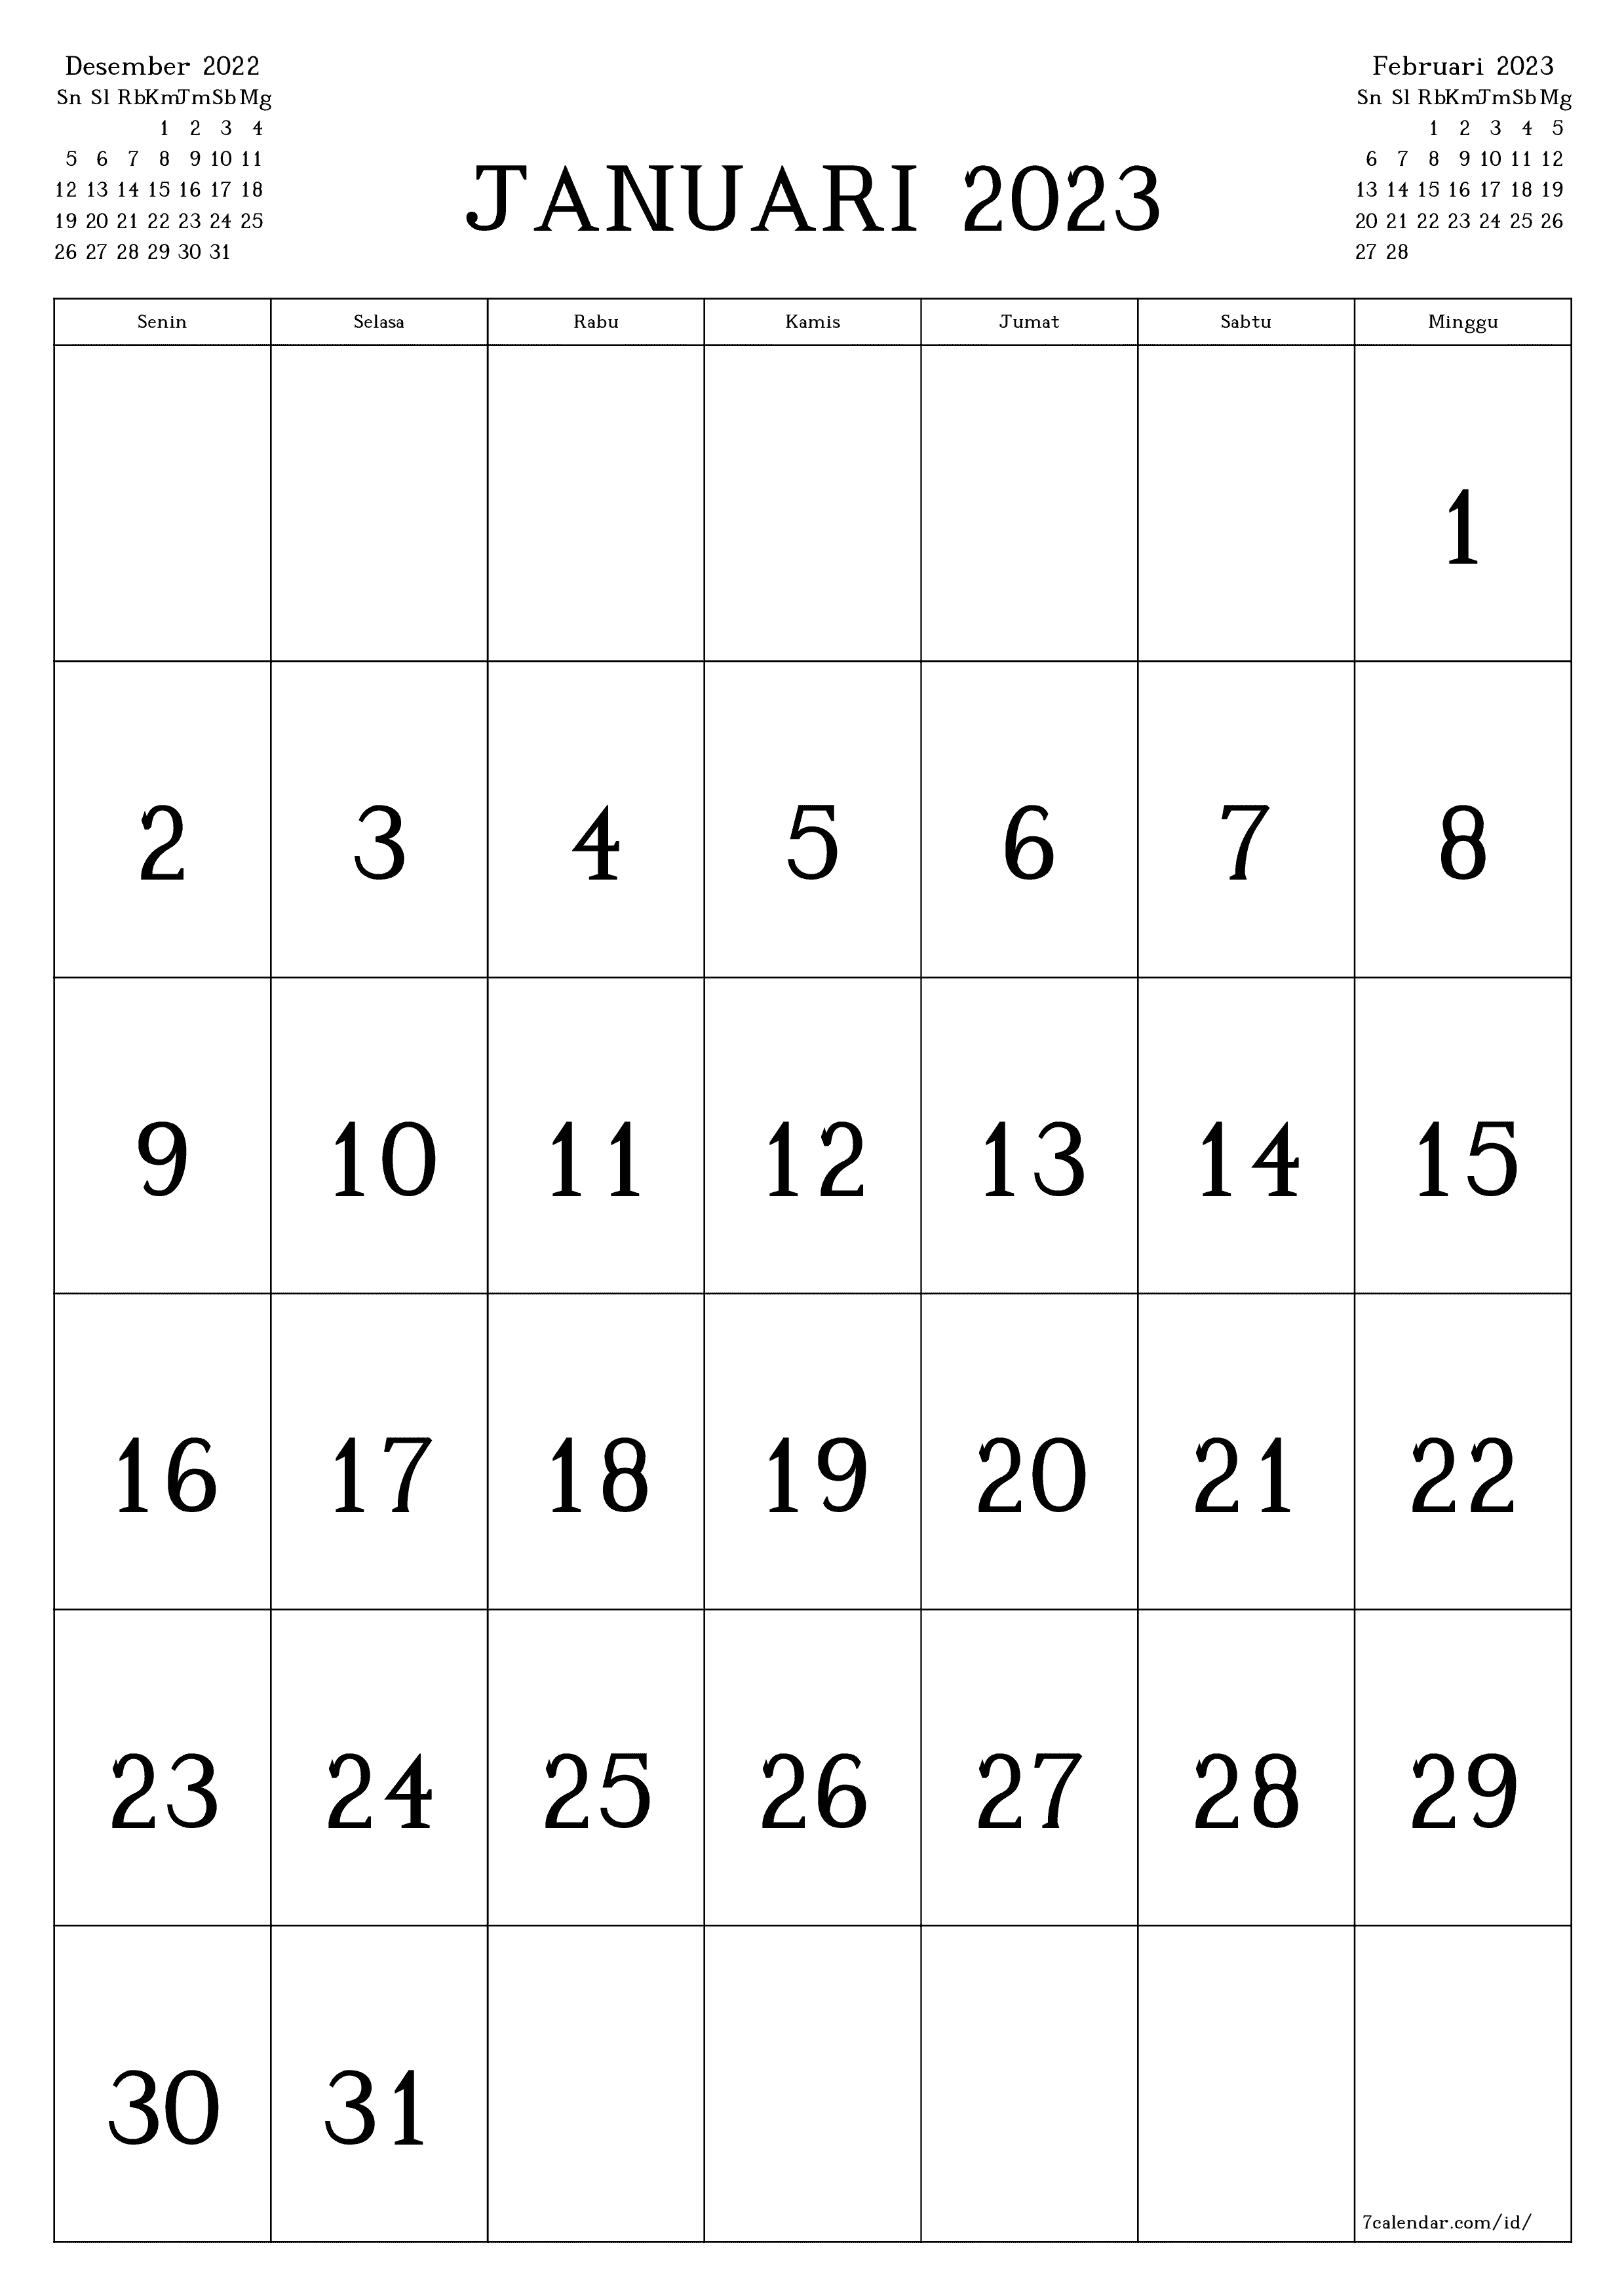 Kalender bulanan kosong untuk bulan Januari 2023 simpan dan cetak ke PDF PNG Indonesian - 7calendar.com